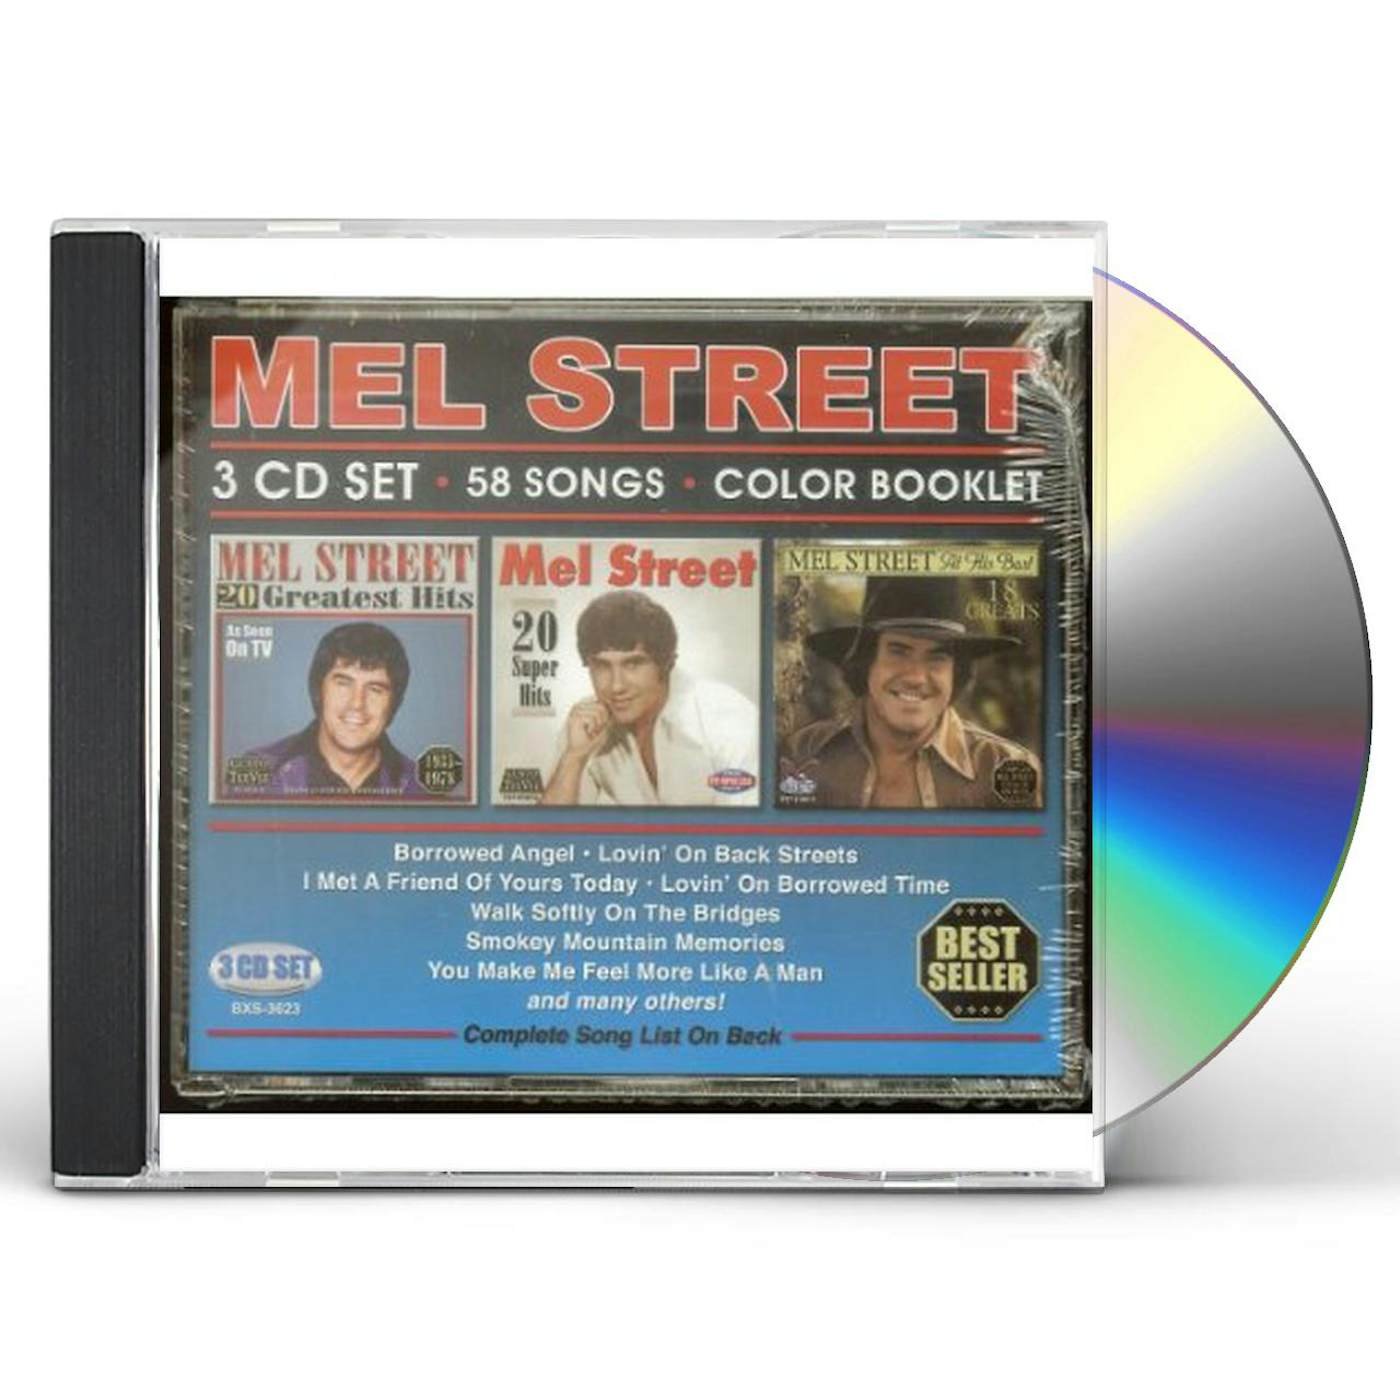 MEL STREET 58 SONGS CD